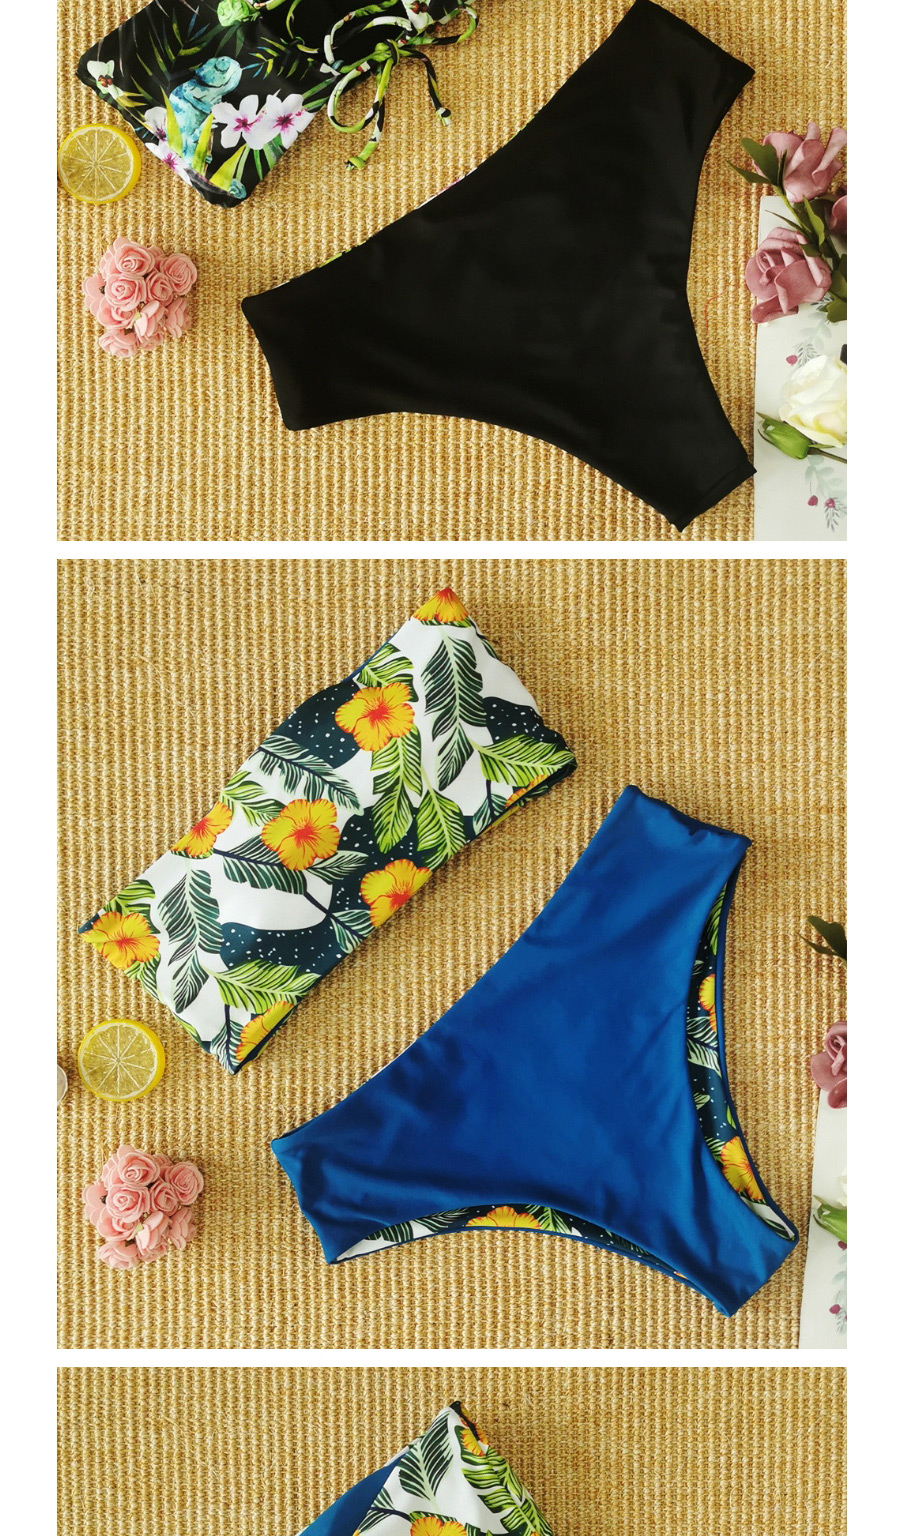 Fashion Blooming Flowers + Yellow Tube Top Print One-shoulder Split Swimsuit,Bikini Sets